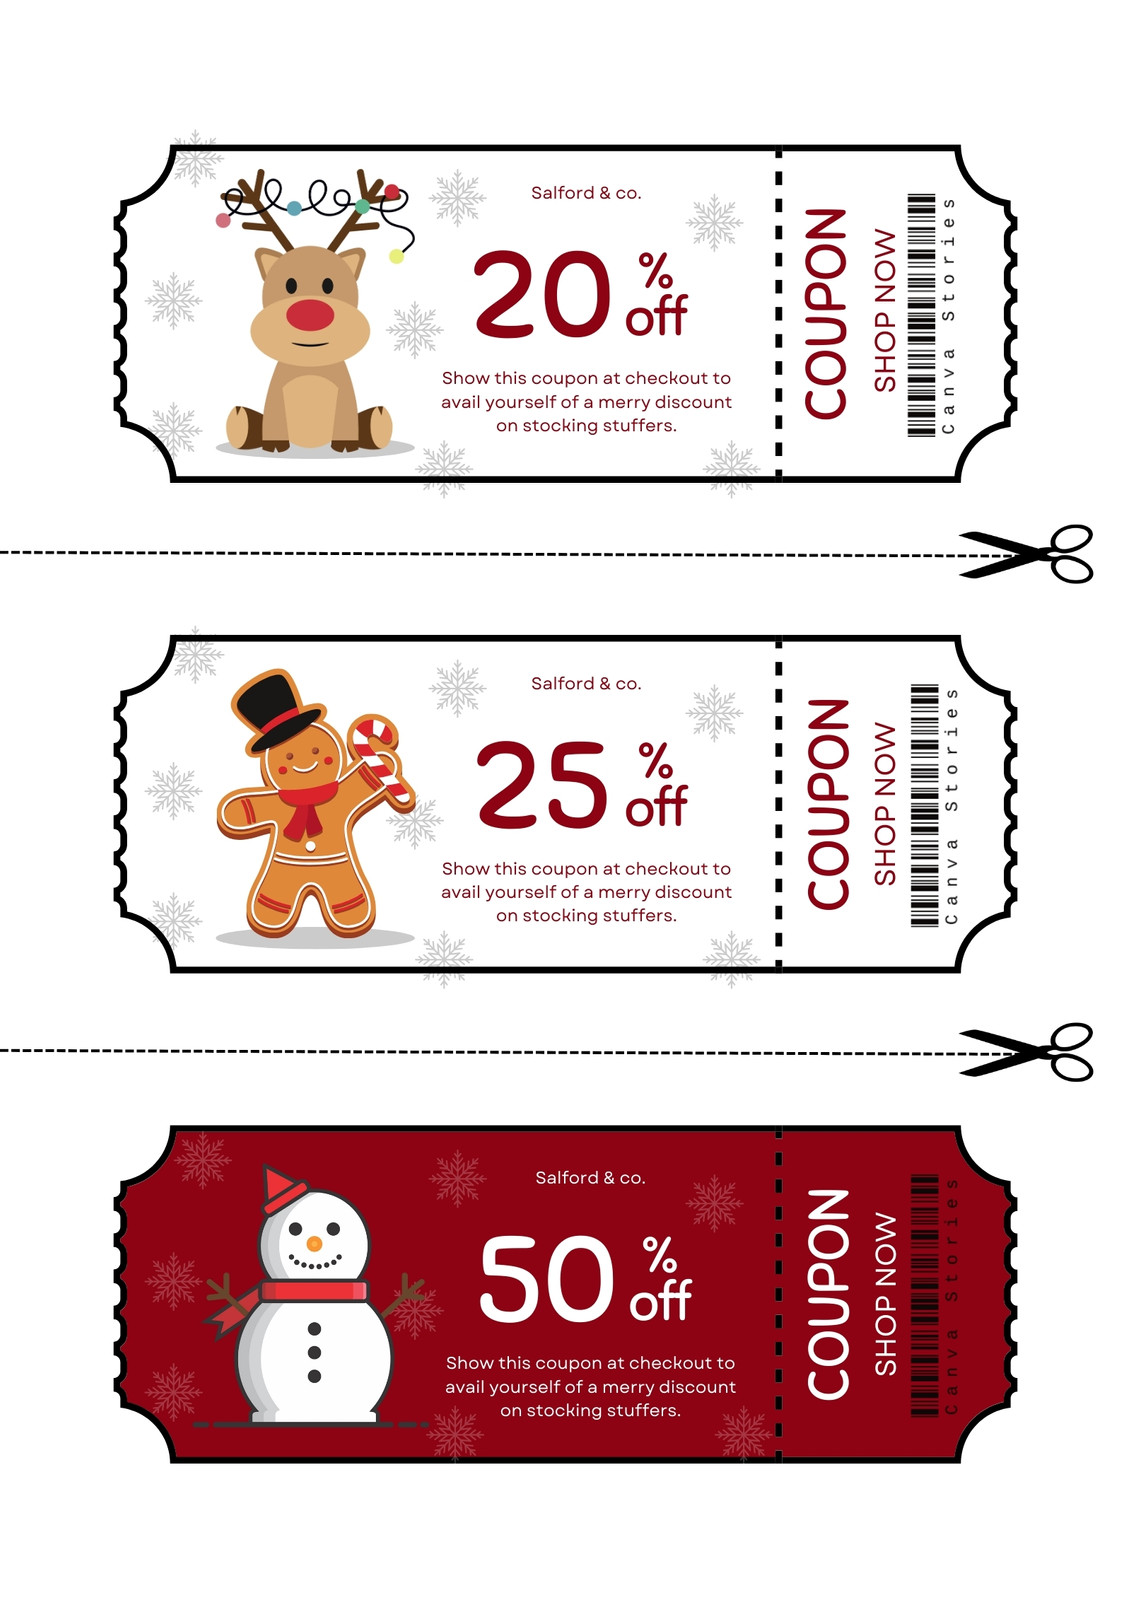 https://marketplace.canva.com/EAFy1QILgvc/1/0/1131w/canva-red-%26-white-simple-christmas-coupon-Em6G6kXw6O0.jpg